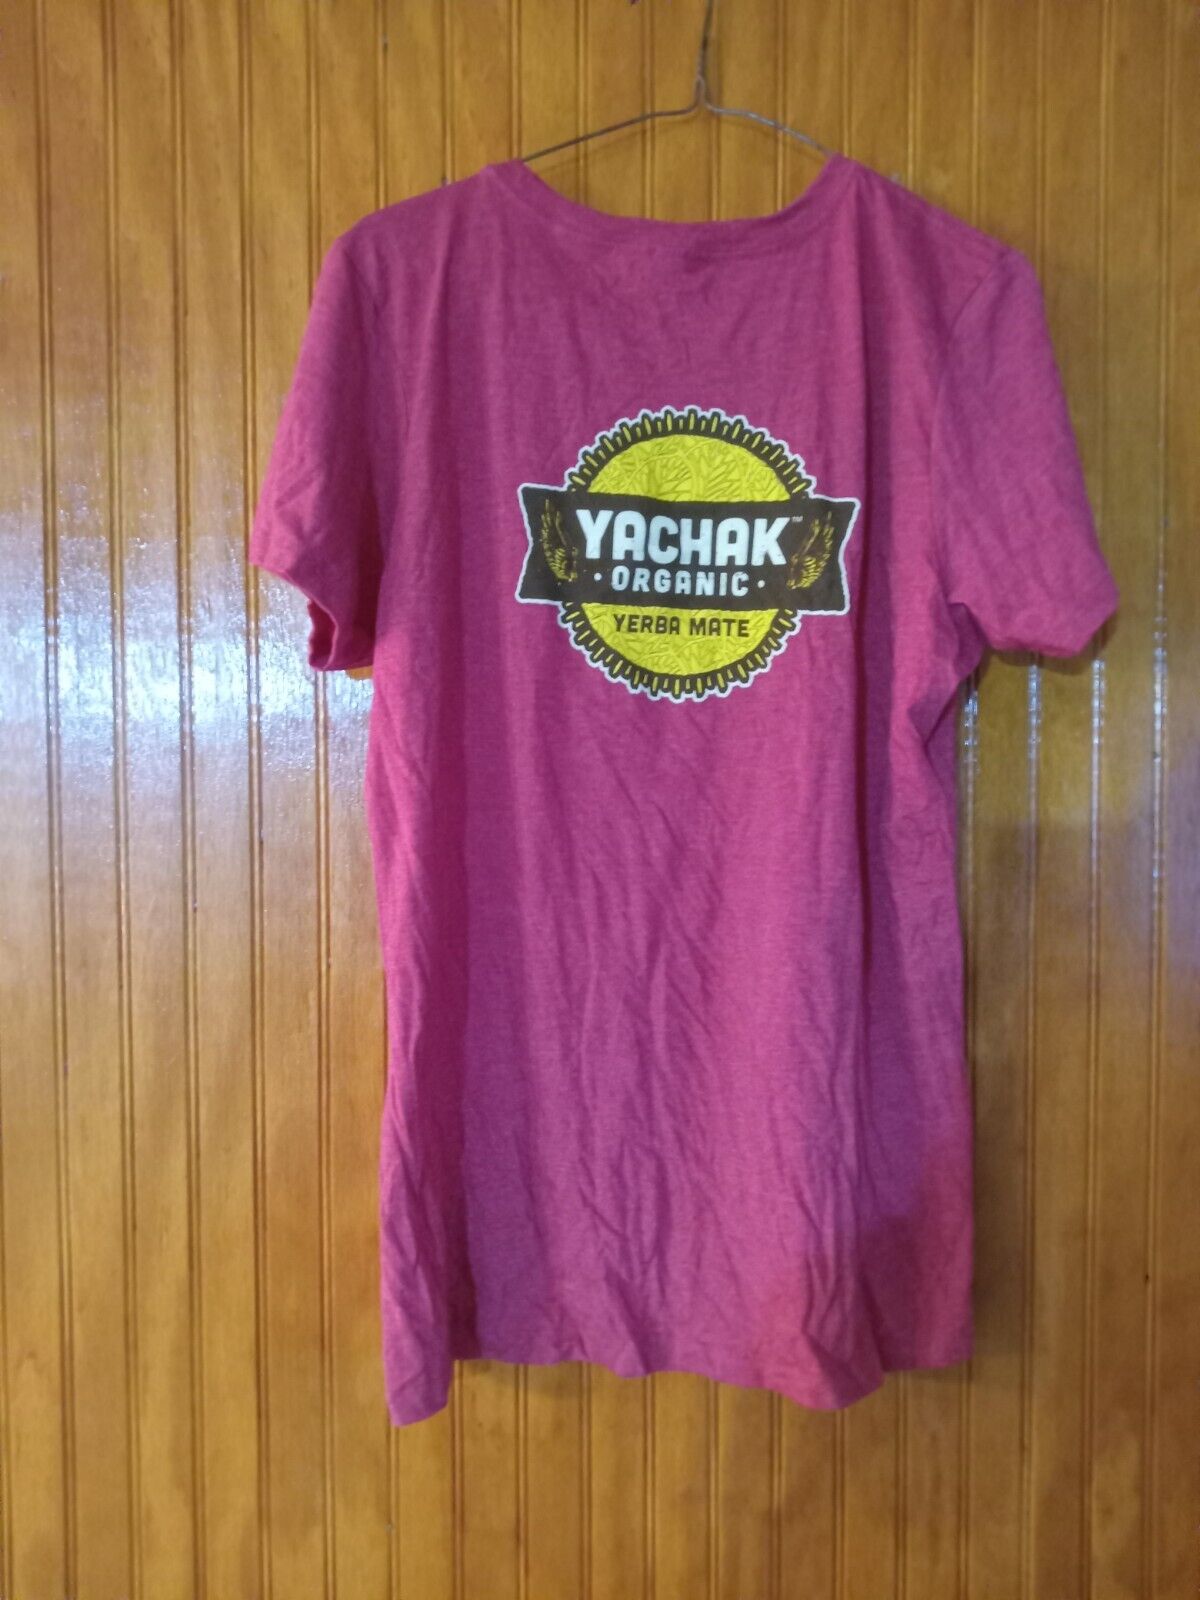 Yachak-Organic Yerba Mate T-Shirt XL 